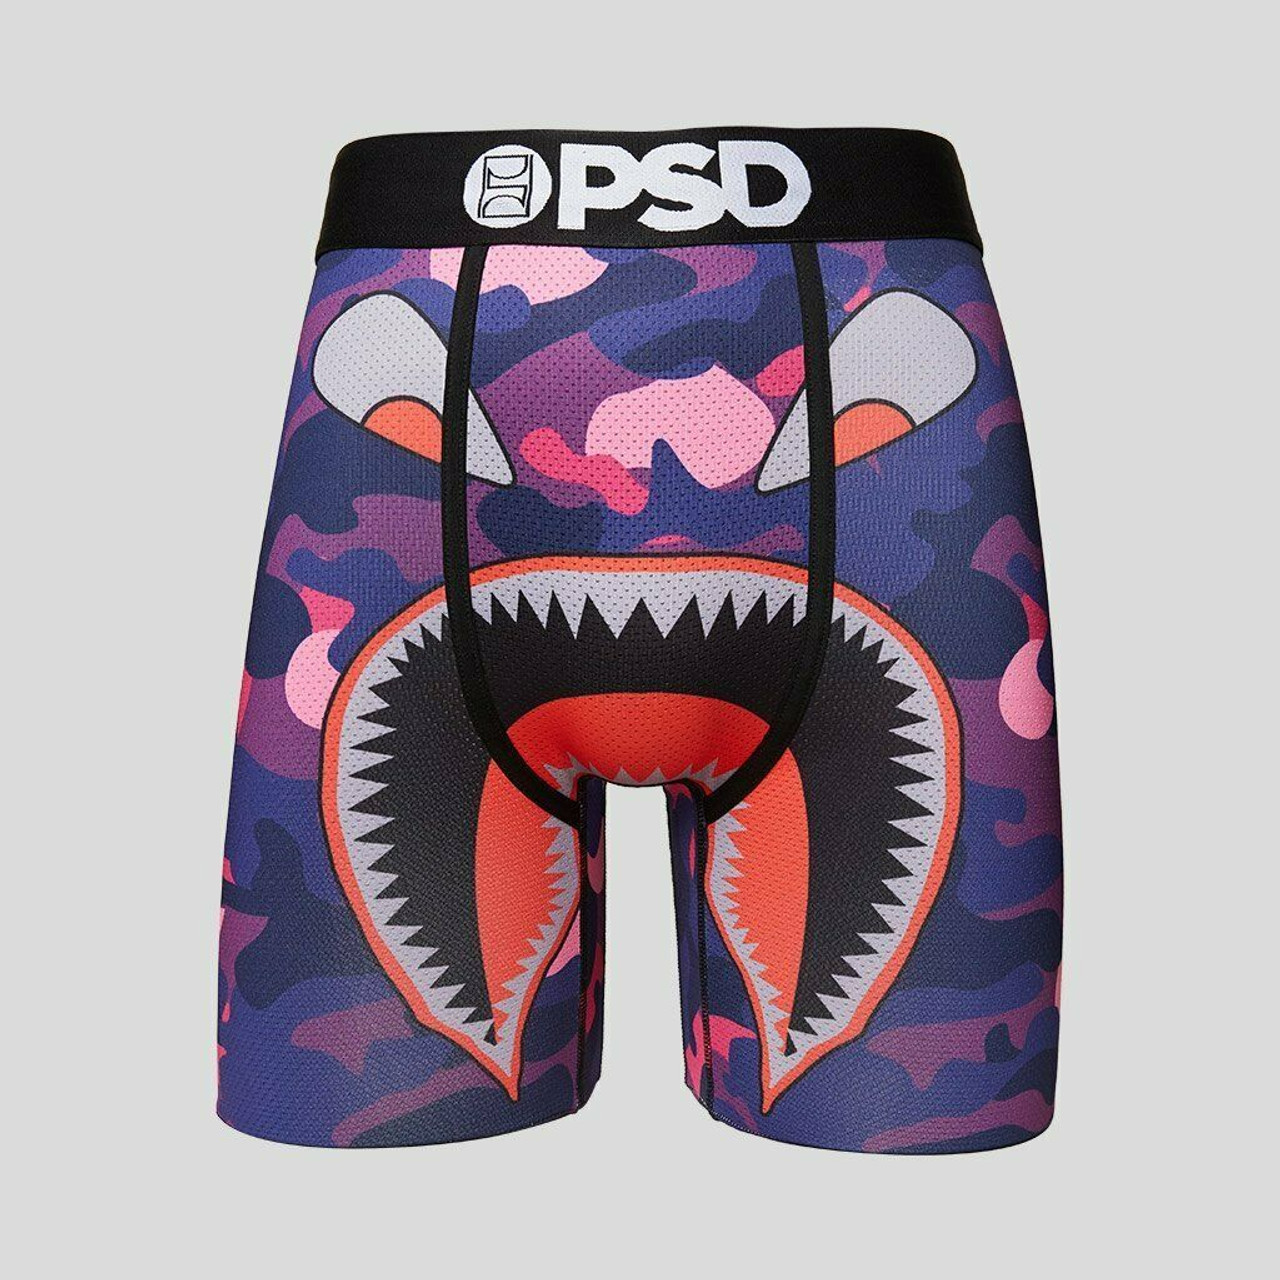 PSD Purple Camouflage Warface Athletic Urban Boxers Briefs Underwear  42011048 - Fearless Apparel